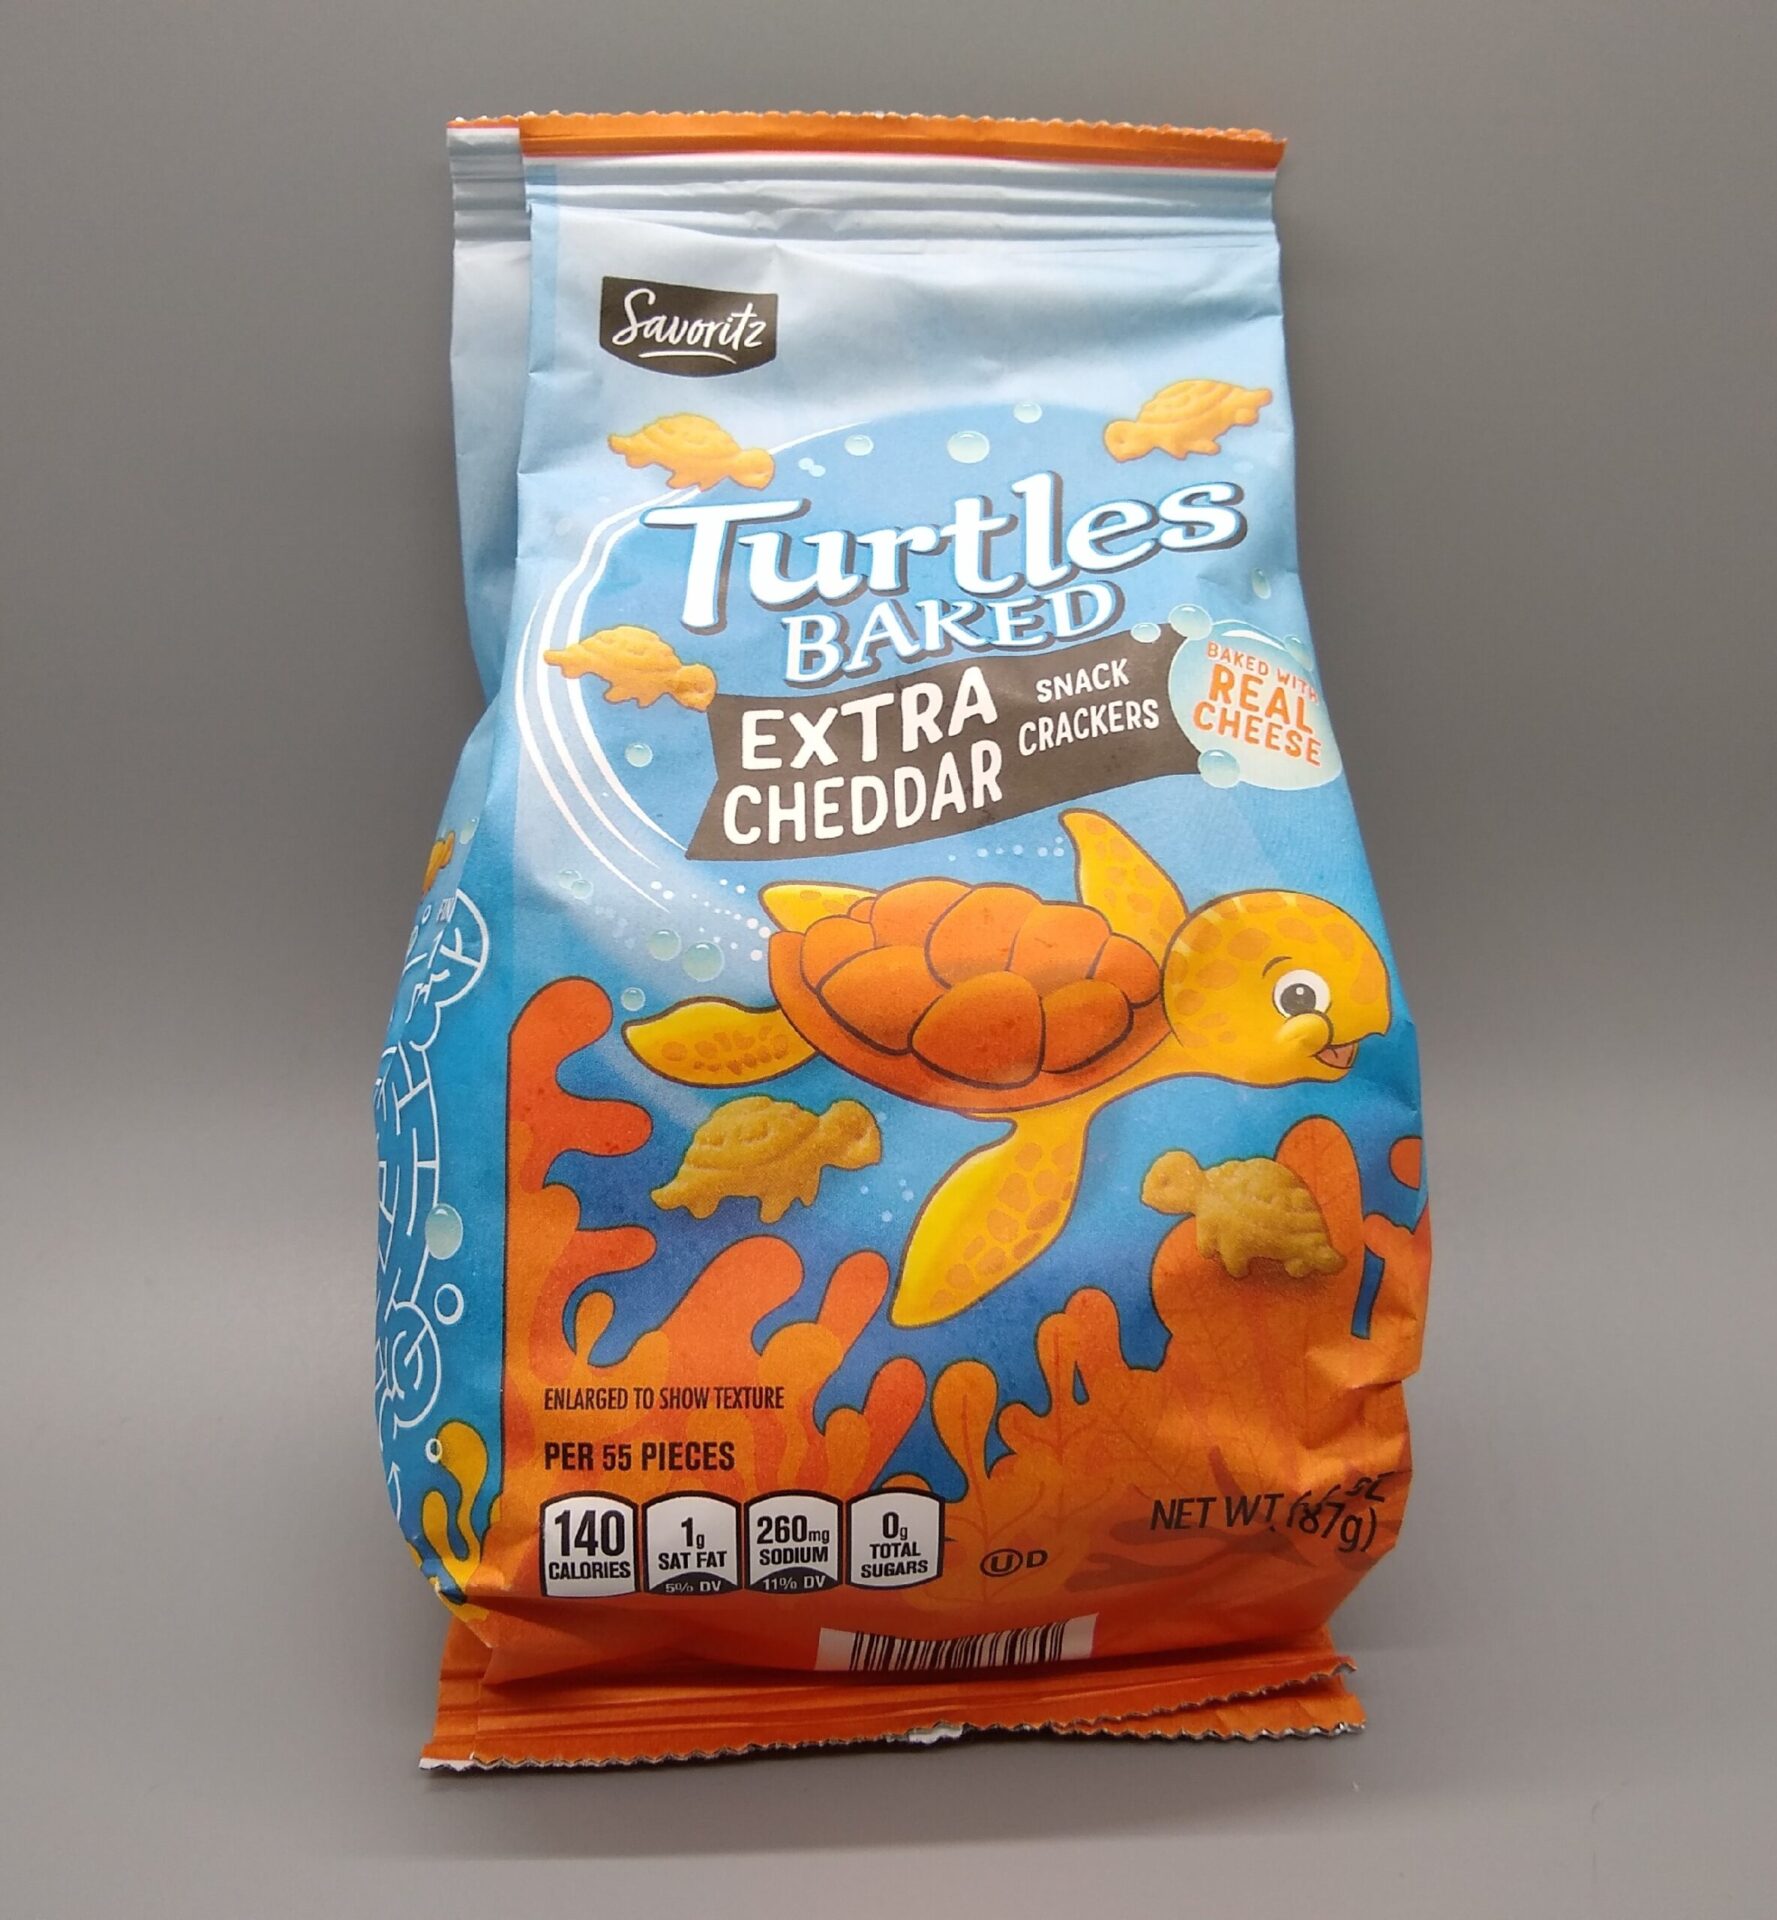 Savoritz Turtles Baked Extra Cheddar Snack Crackers